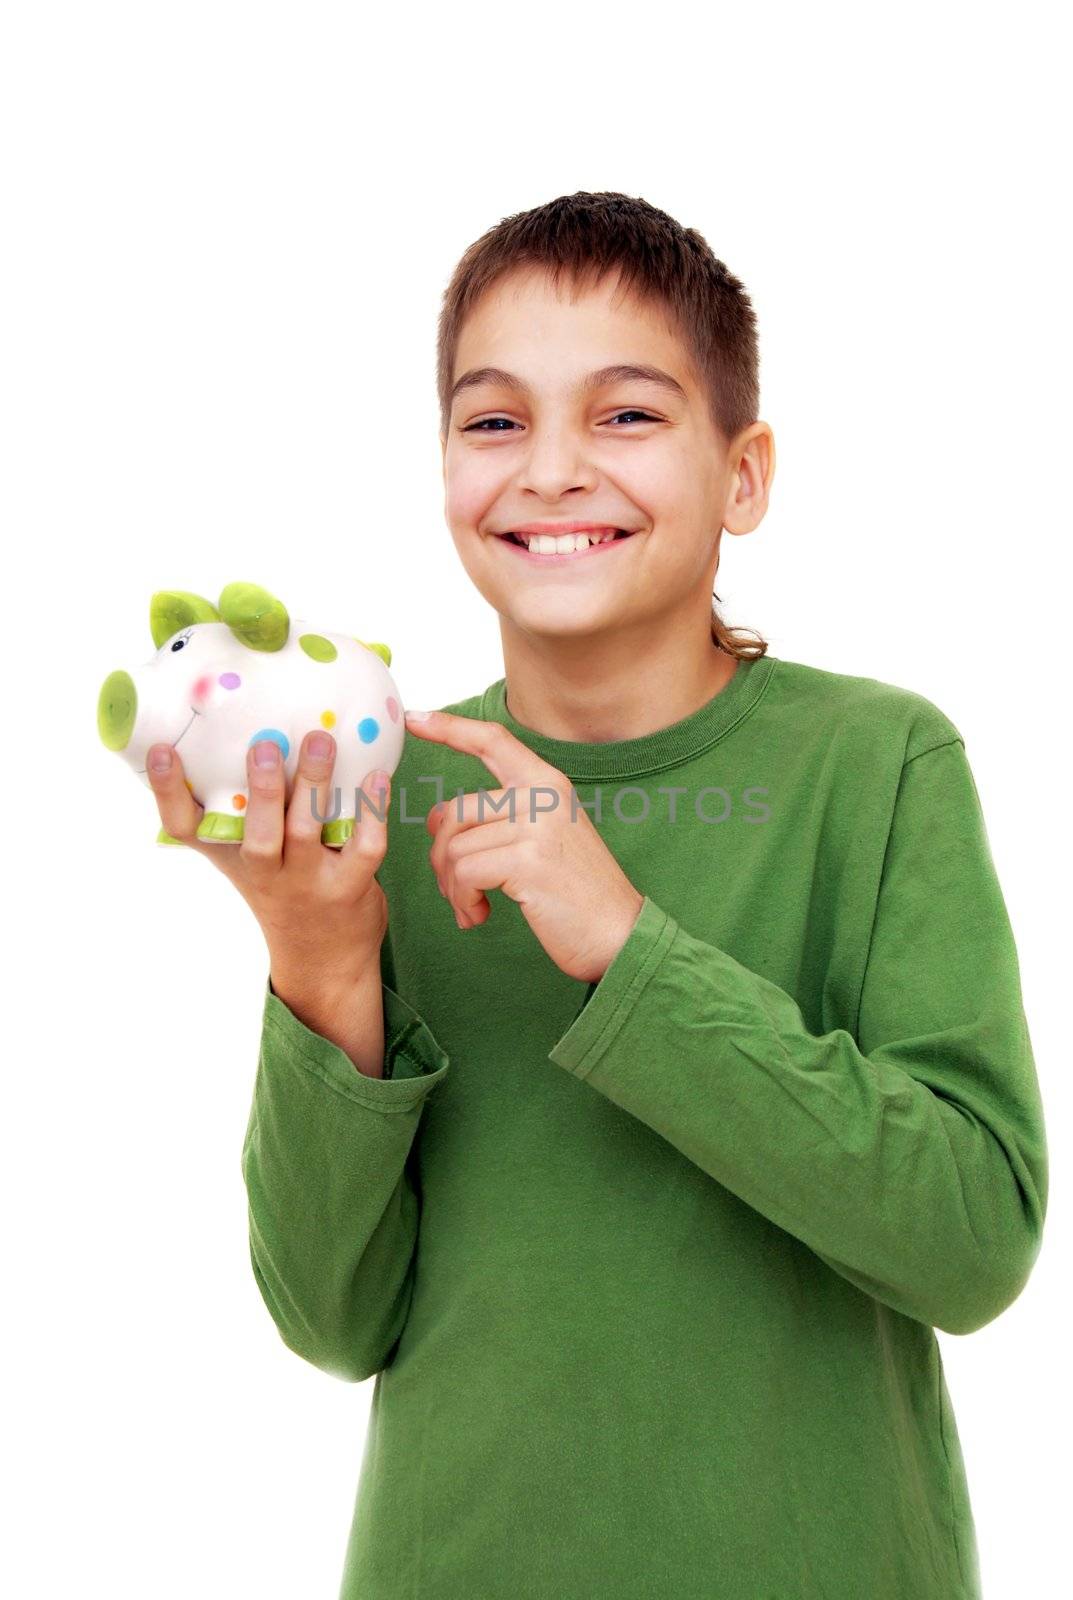 teenage boy smiling portrait points piggy money box isolated on white